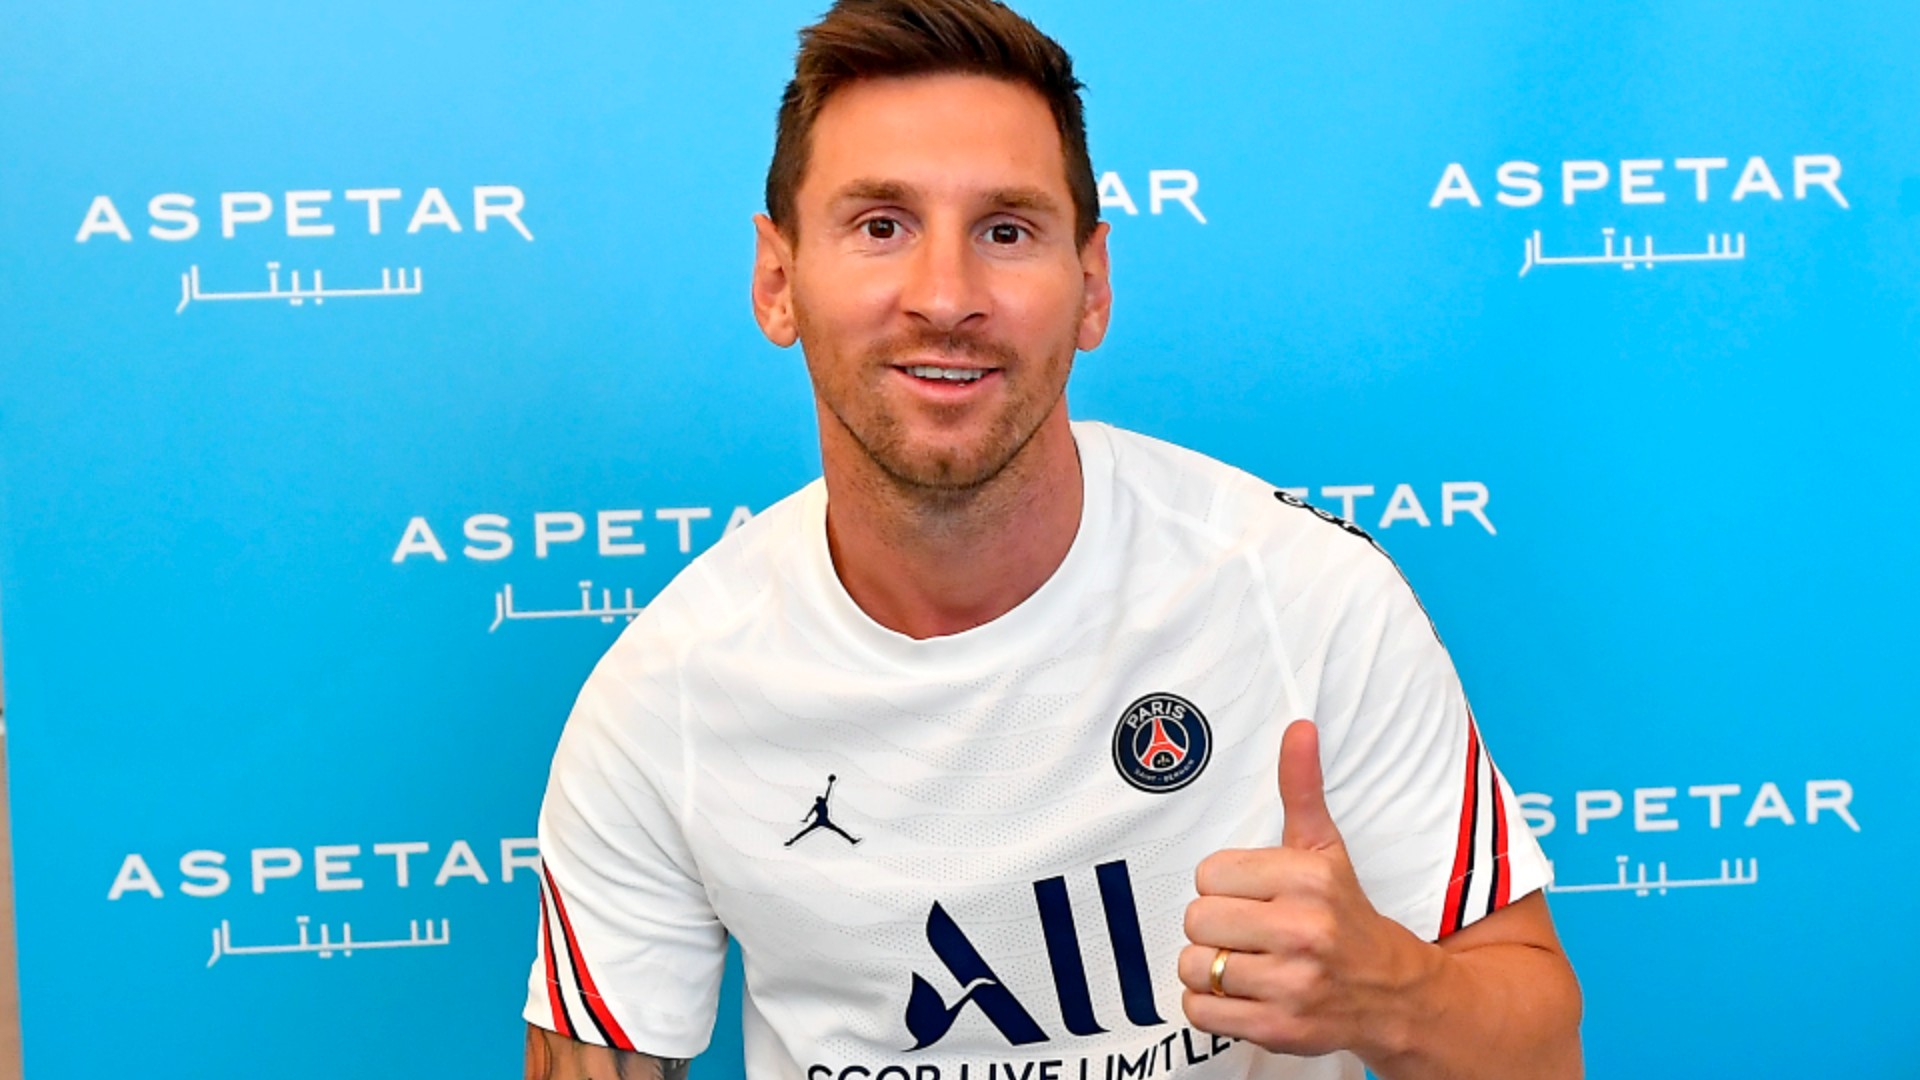 Lionel Messi's new team: PSG signs superstar after leaving Barcelona